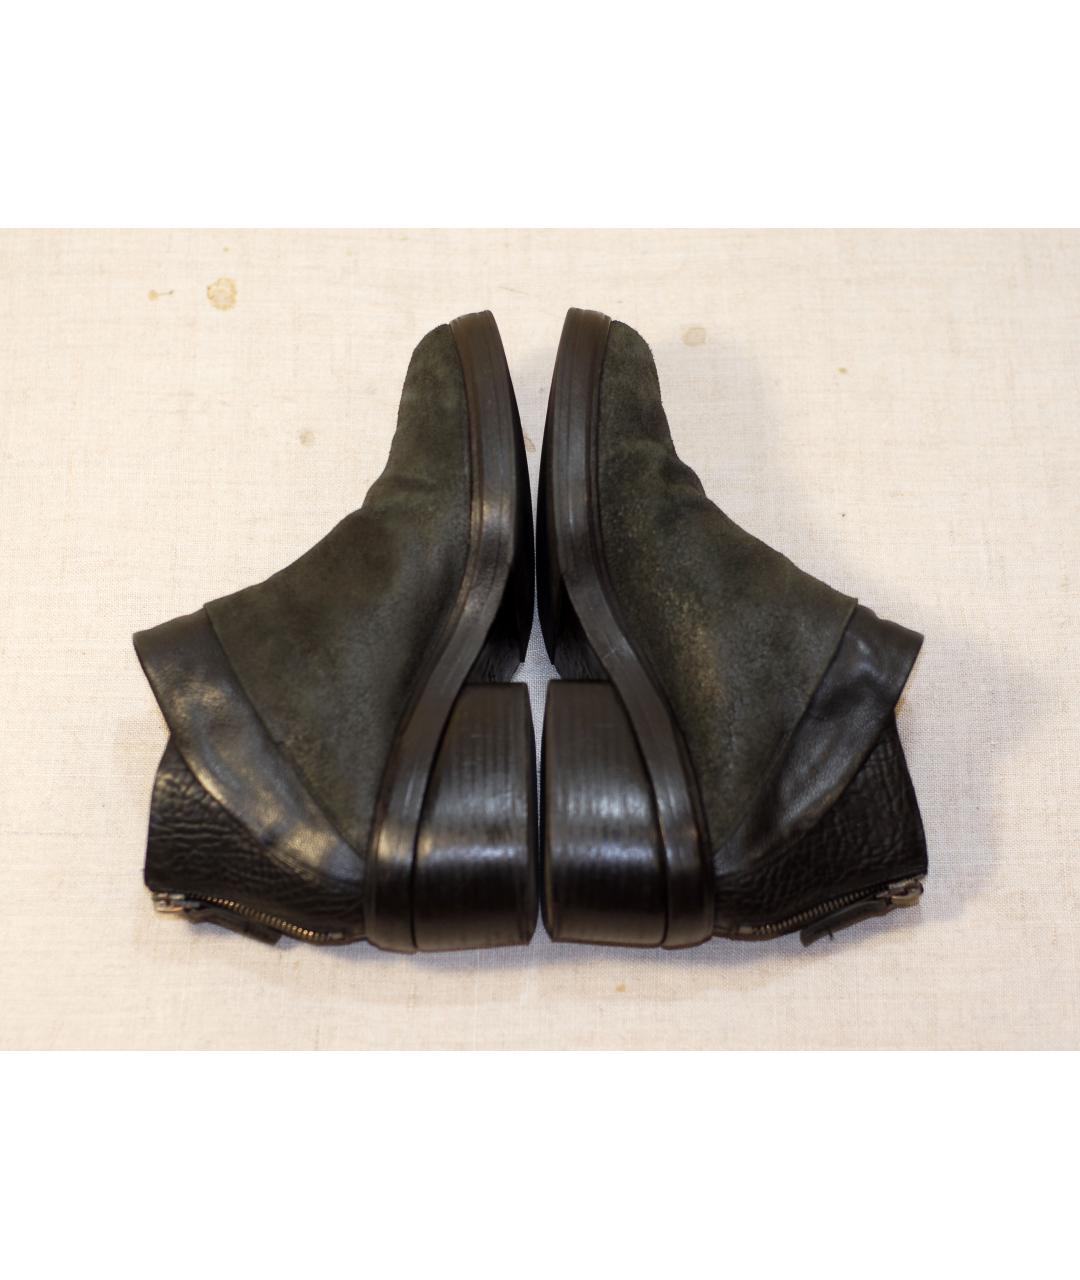 MARSELL Черные кожаные ботинки, фото 4